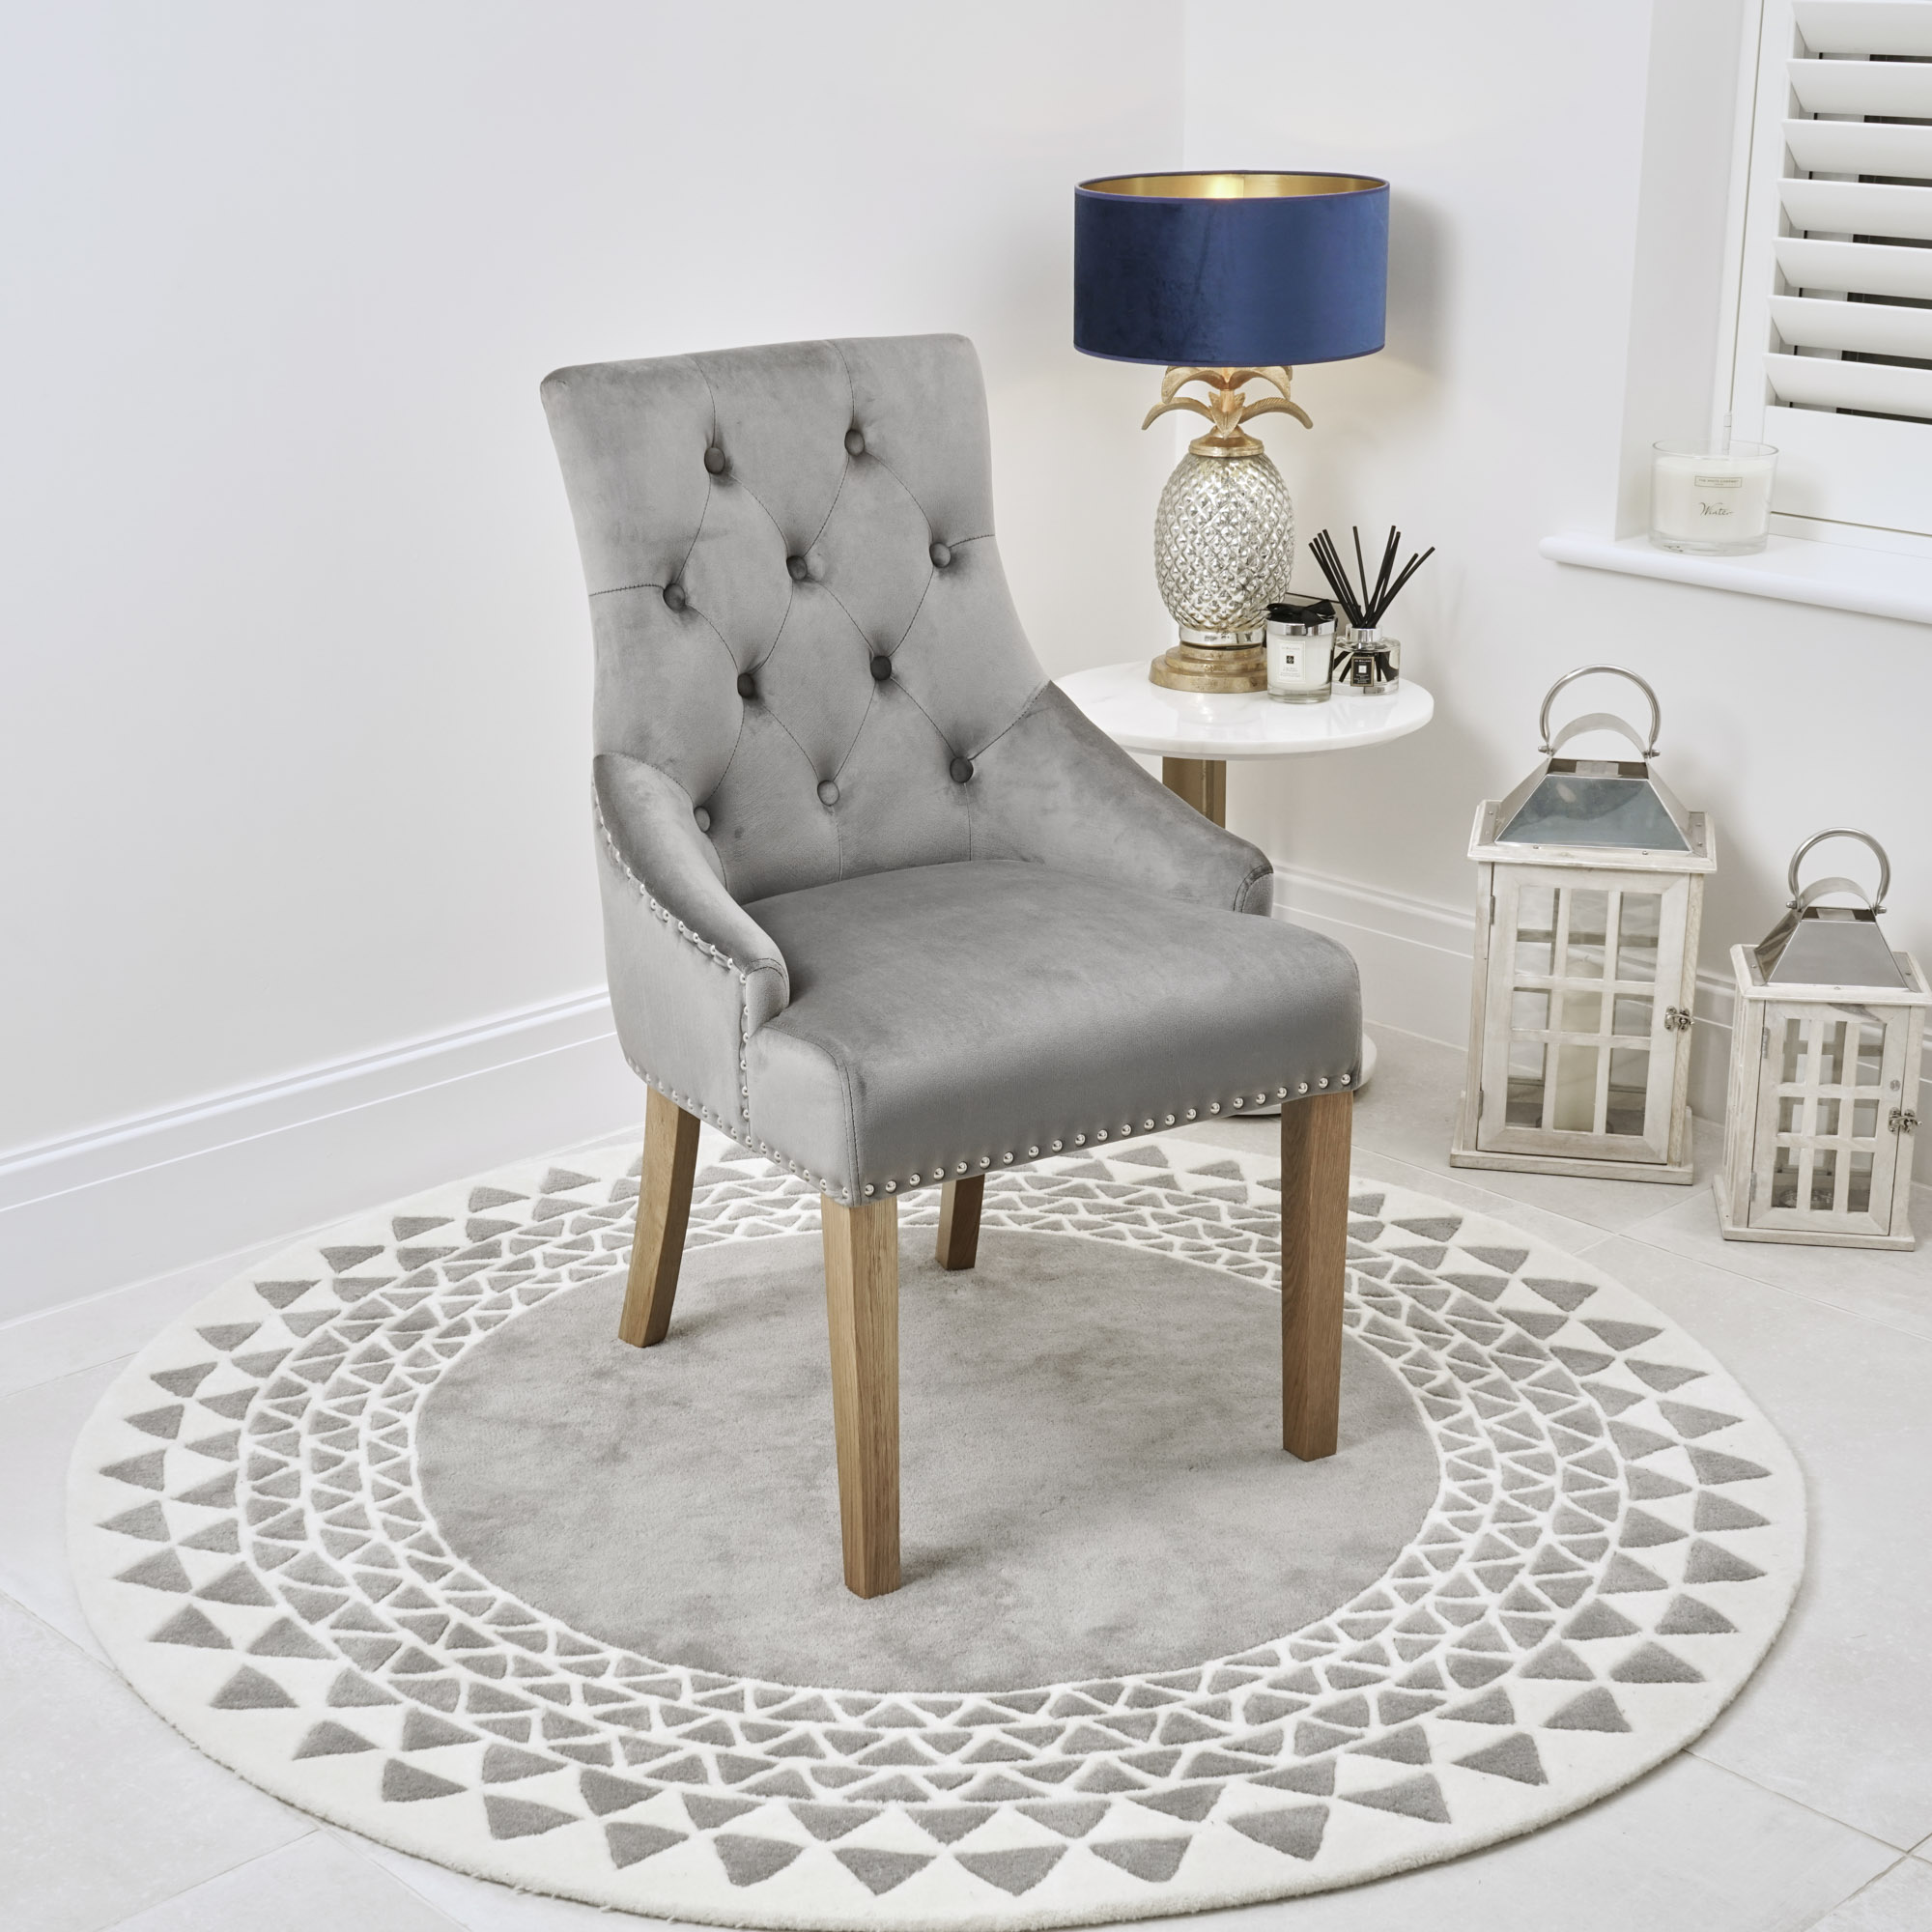 Chelsea Scoop Grey Velvet Dining Chair – Oak Legs